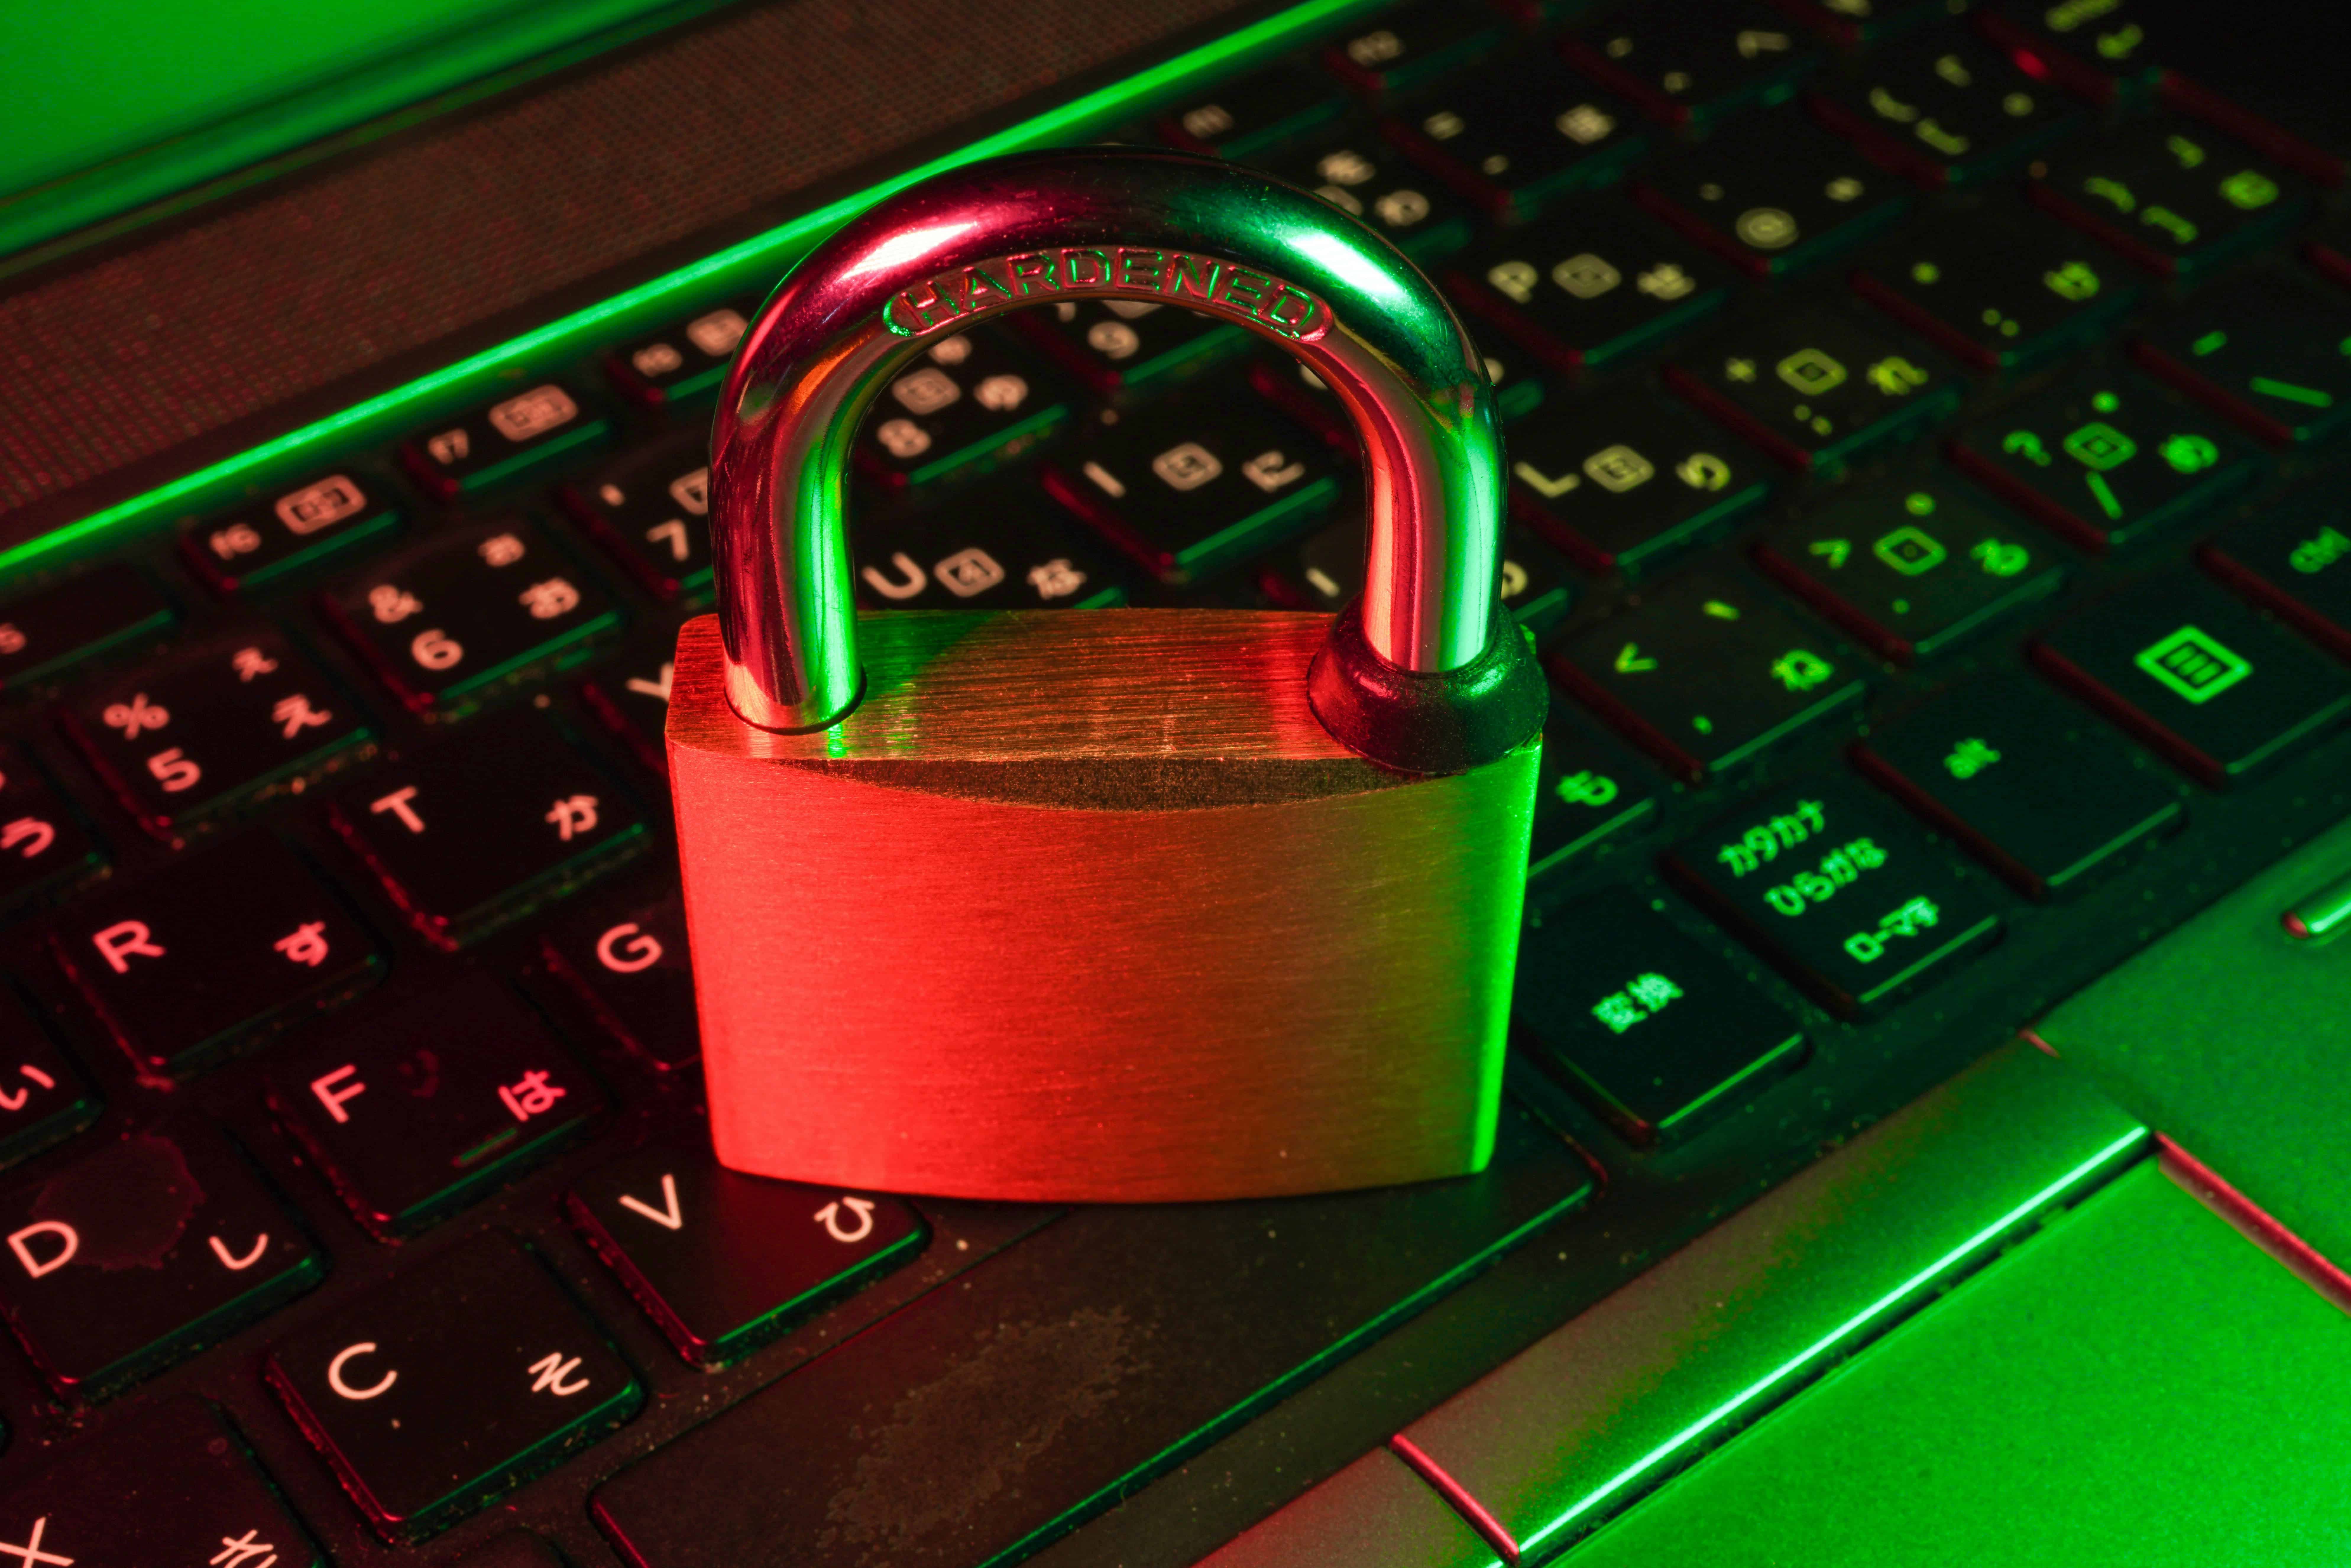 Padlock over keyboard, highlighting cybersecurity